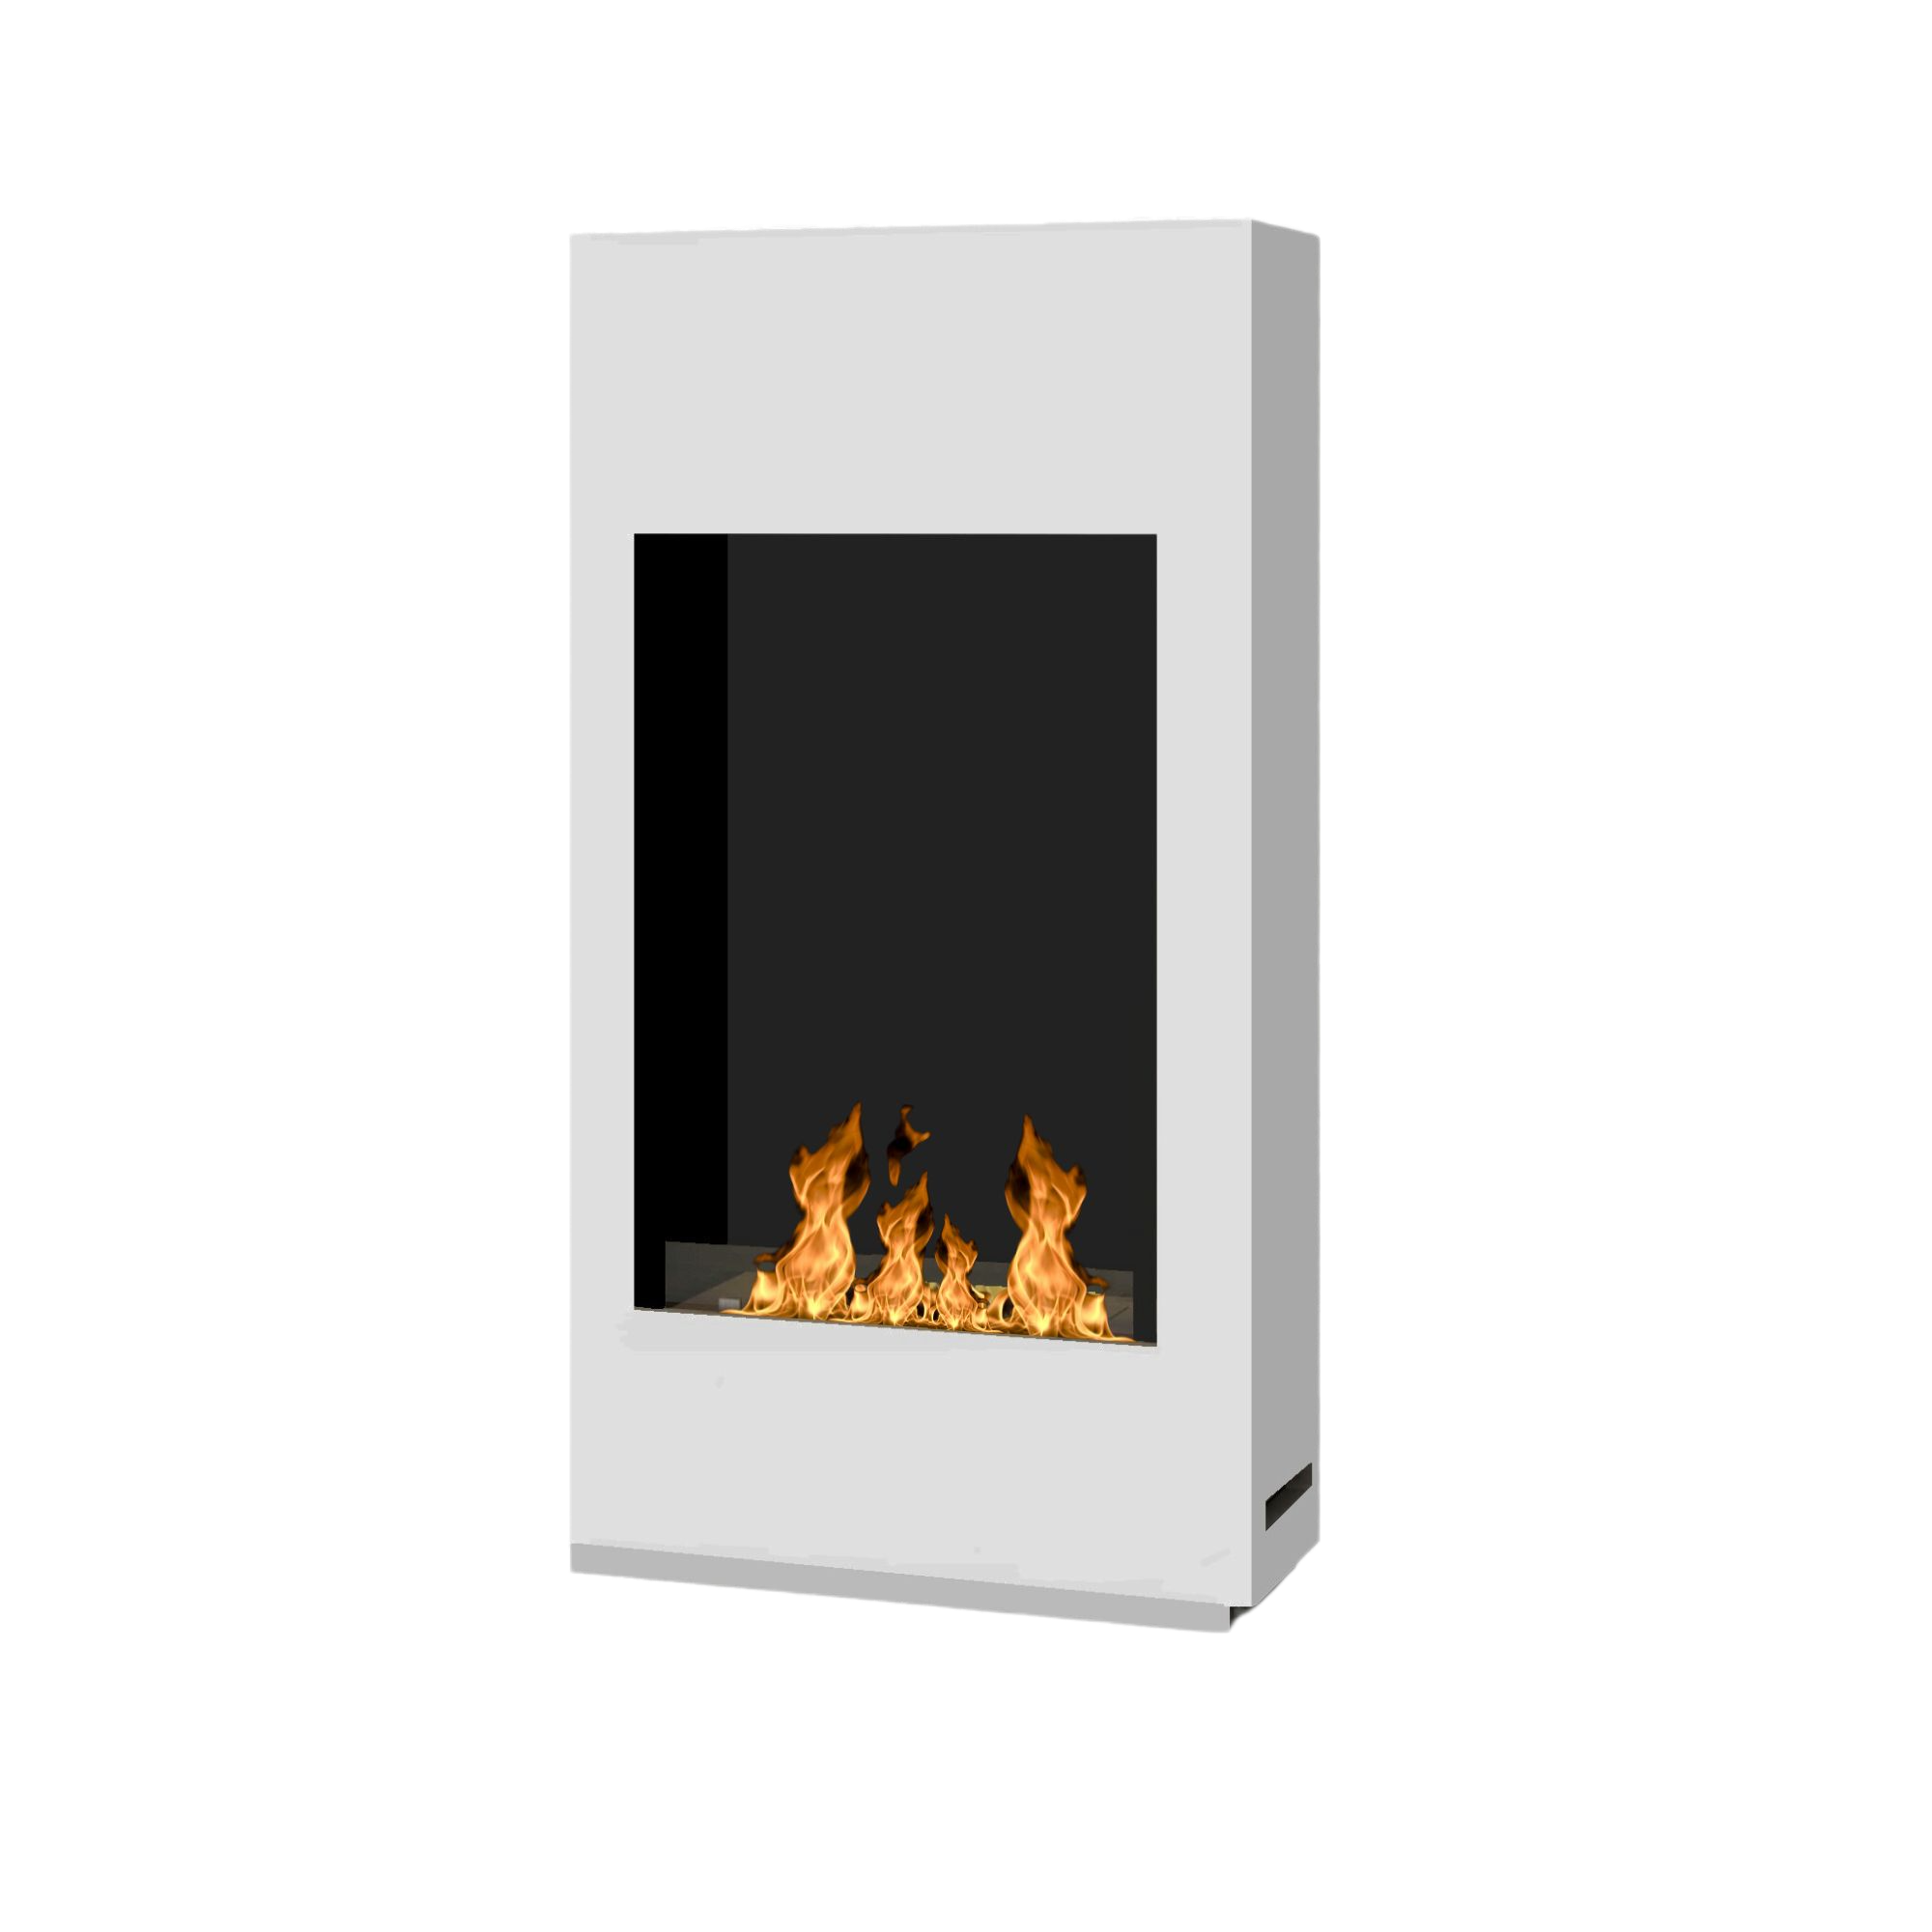 Flame White Freestanding Bio-Ethanol Stove Fireplace